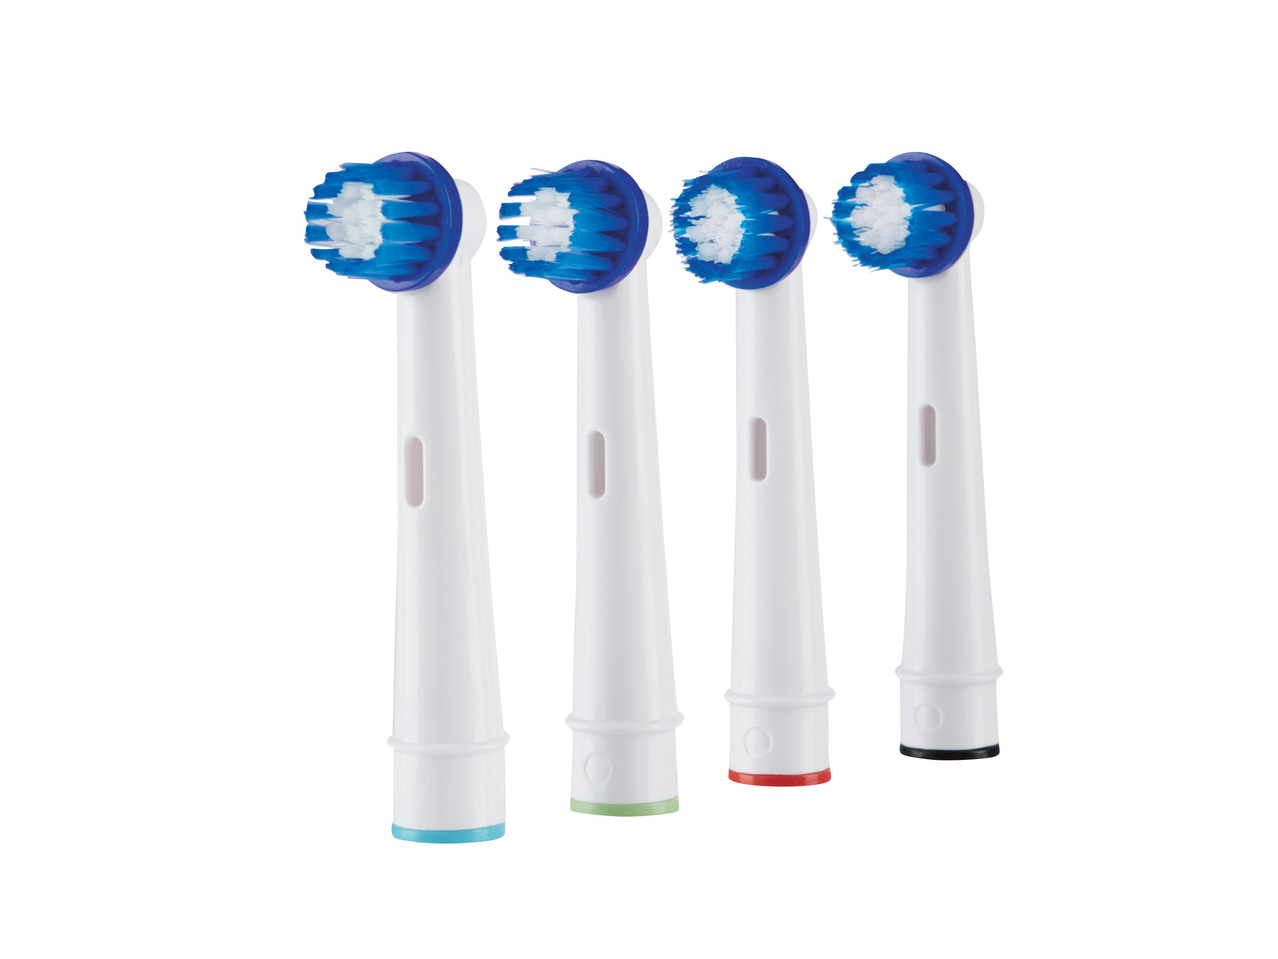 Nevadent Battery-Powered Toothbrush1